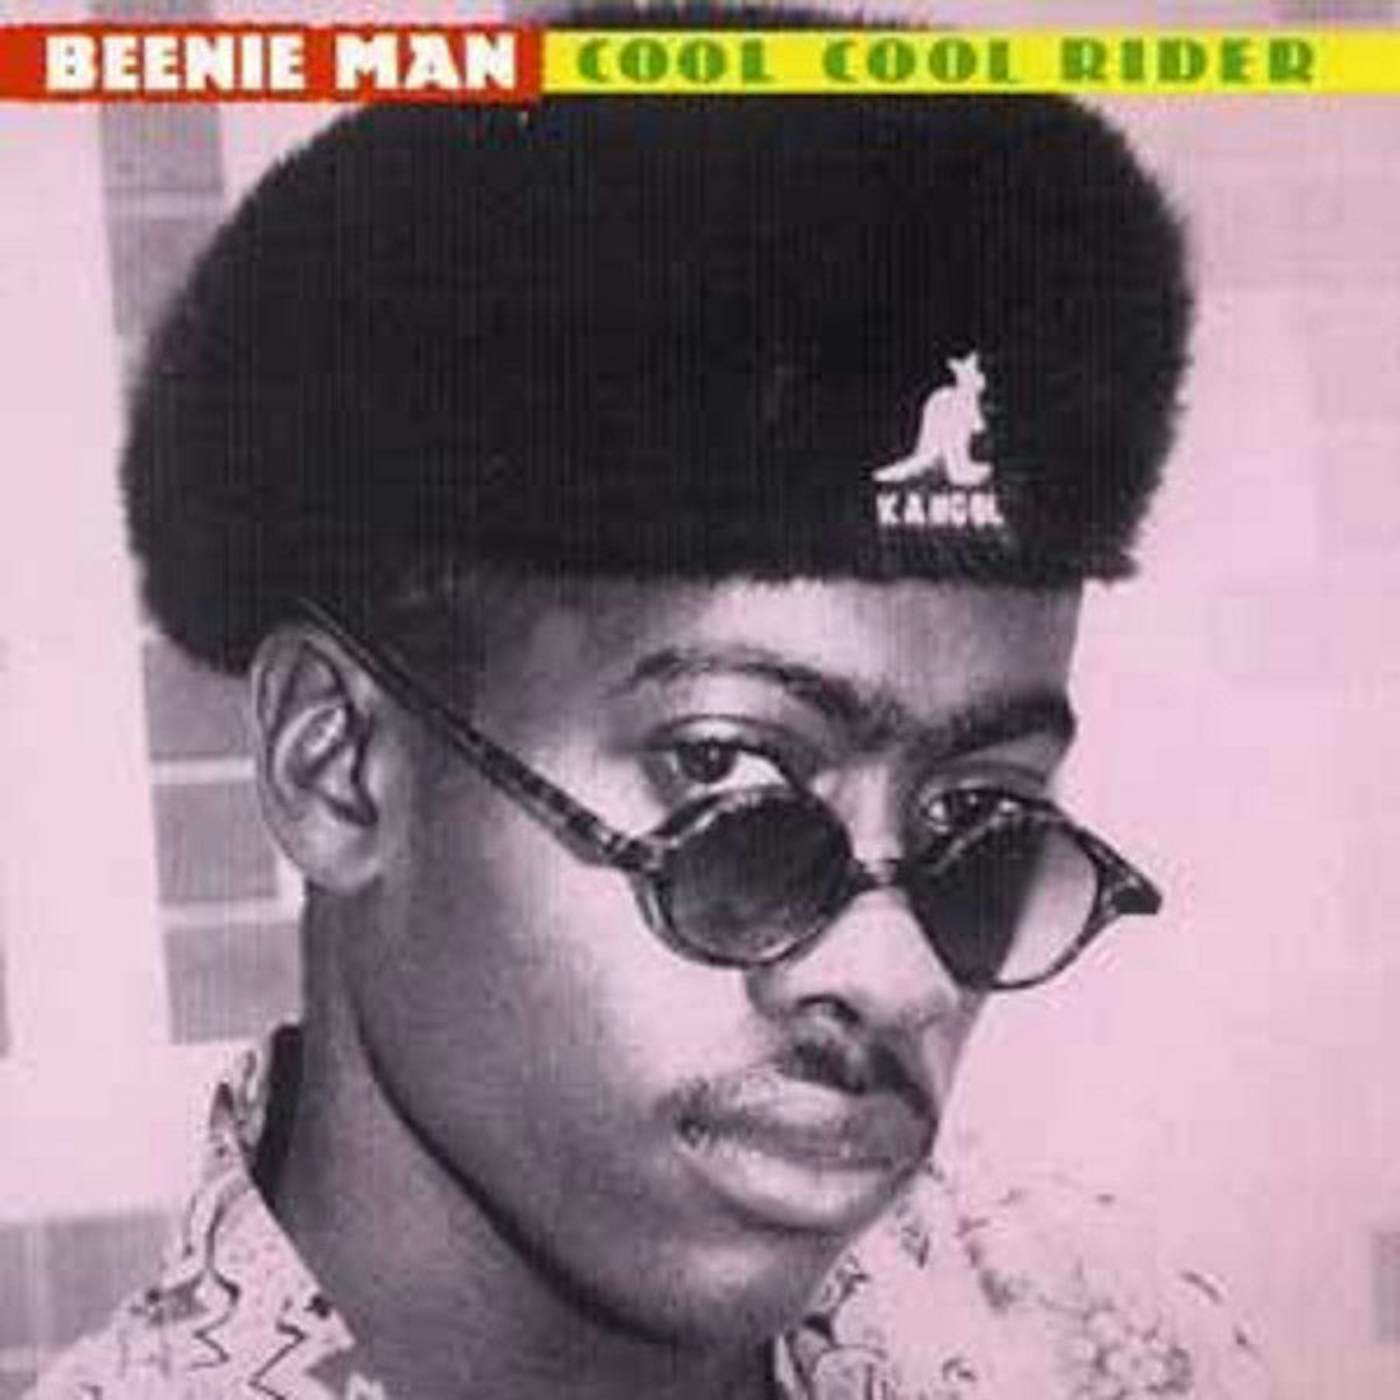 Beenie Man Cool Cool Rider Vinyl Record